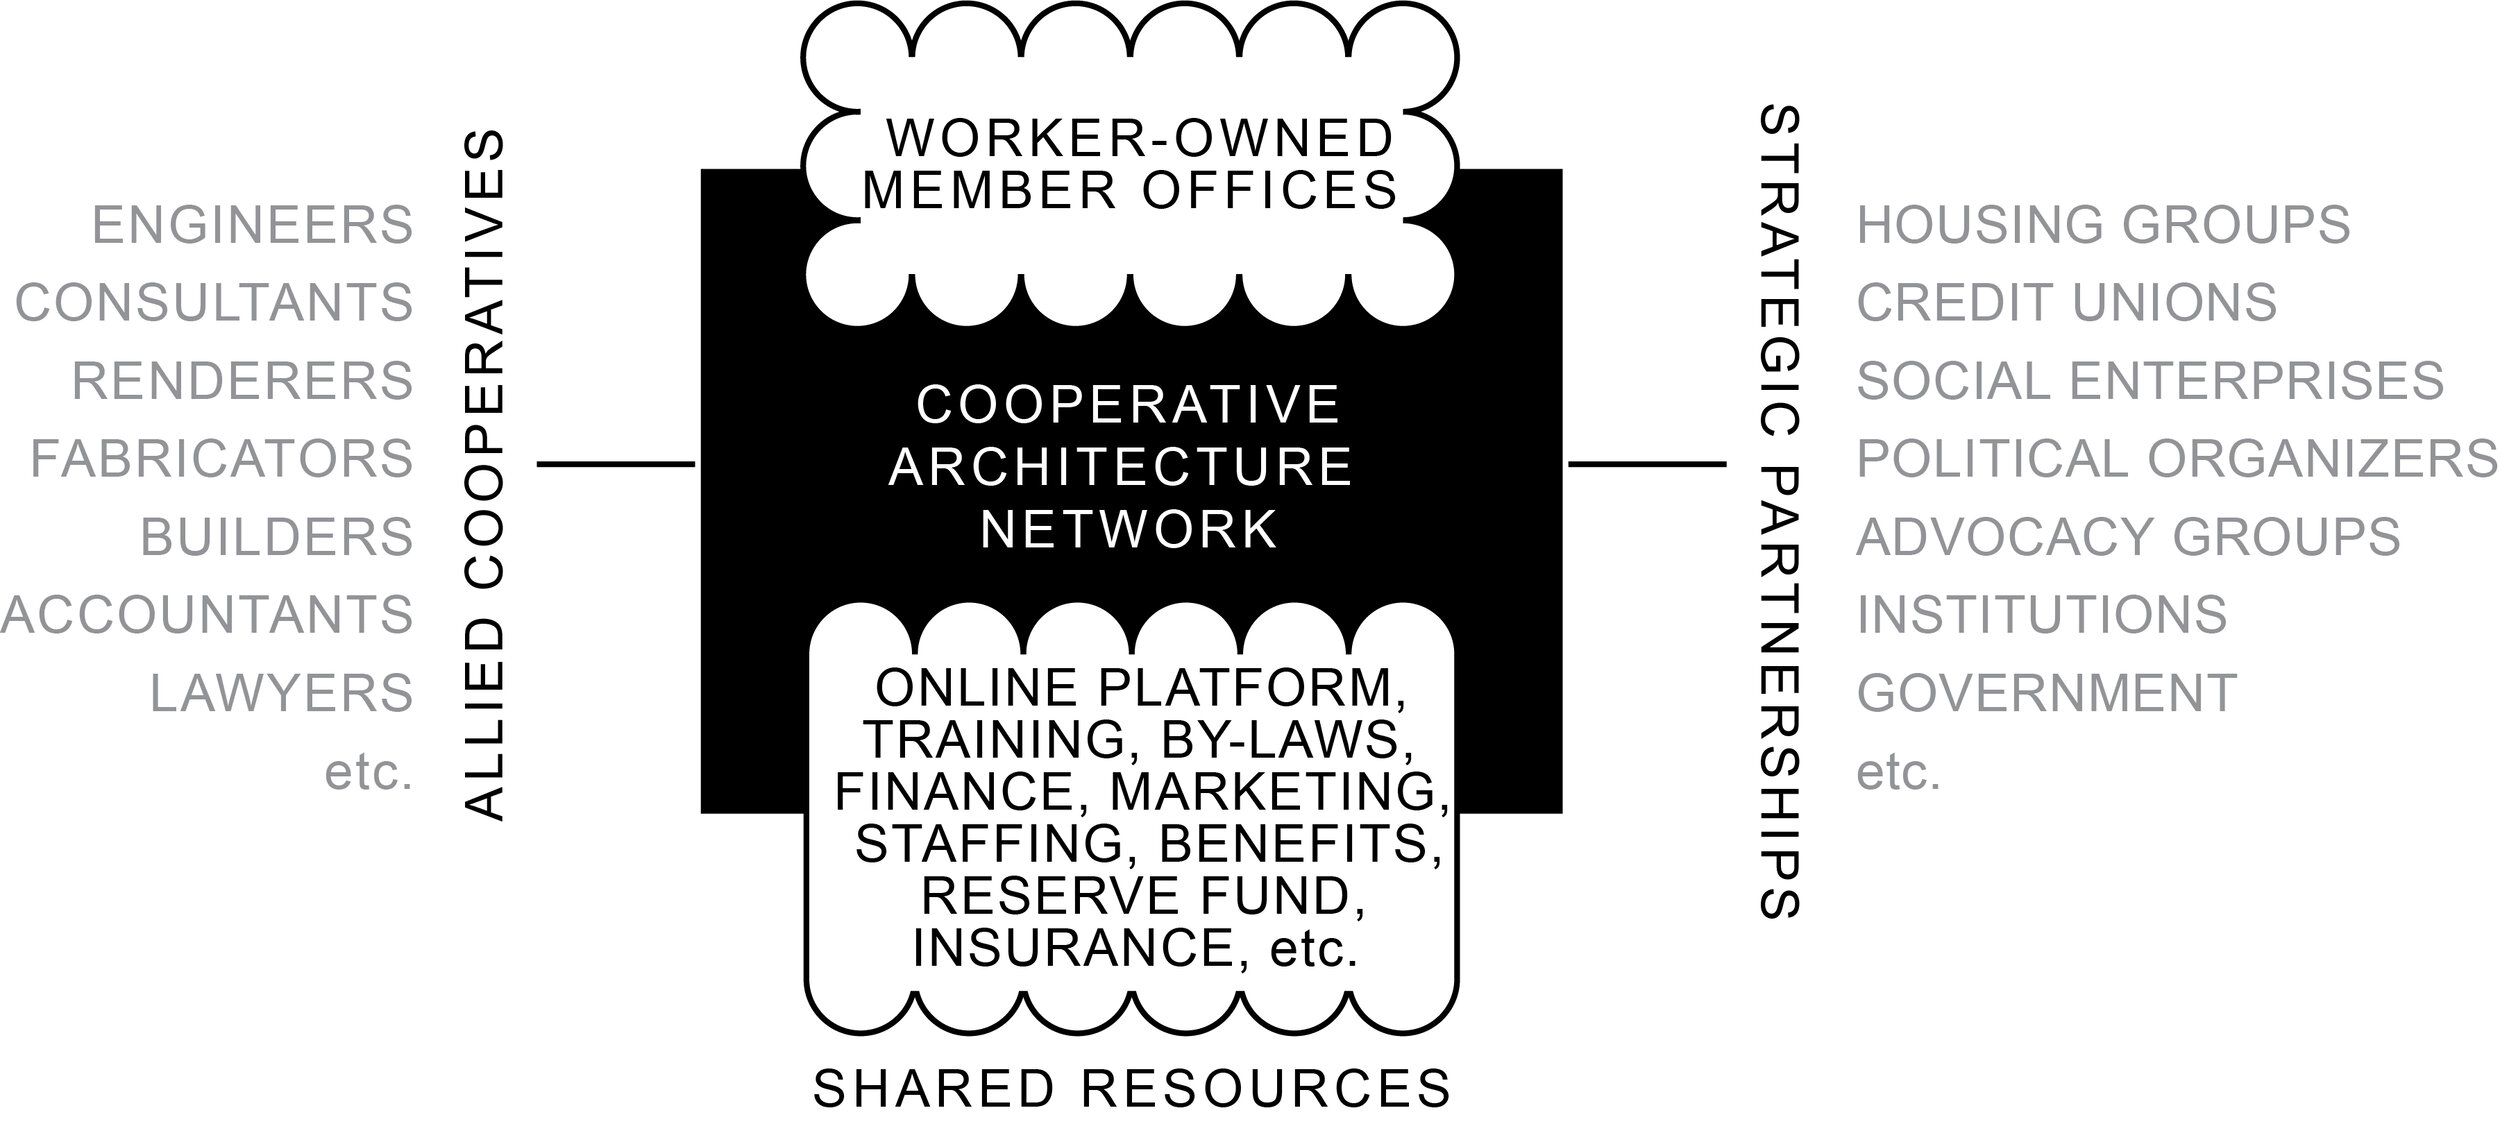 coop-network-structure.jpg